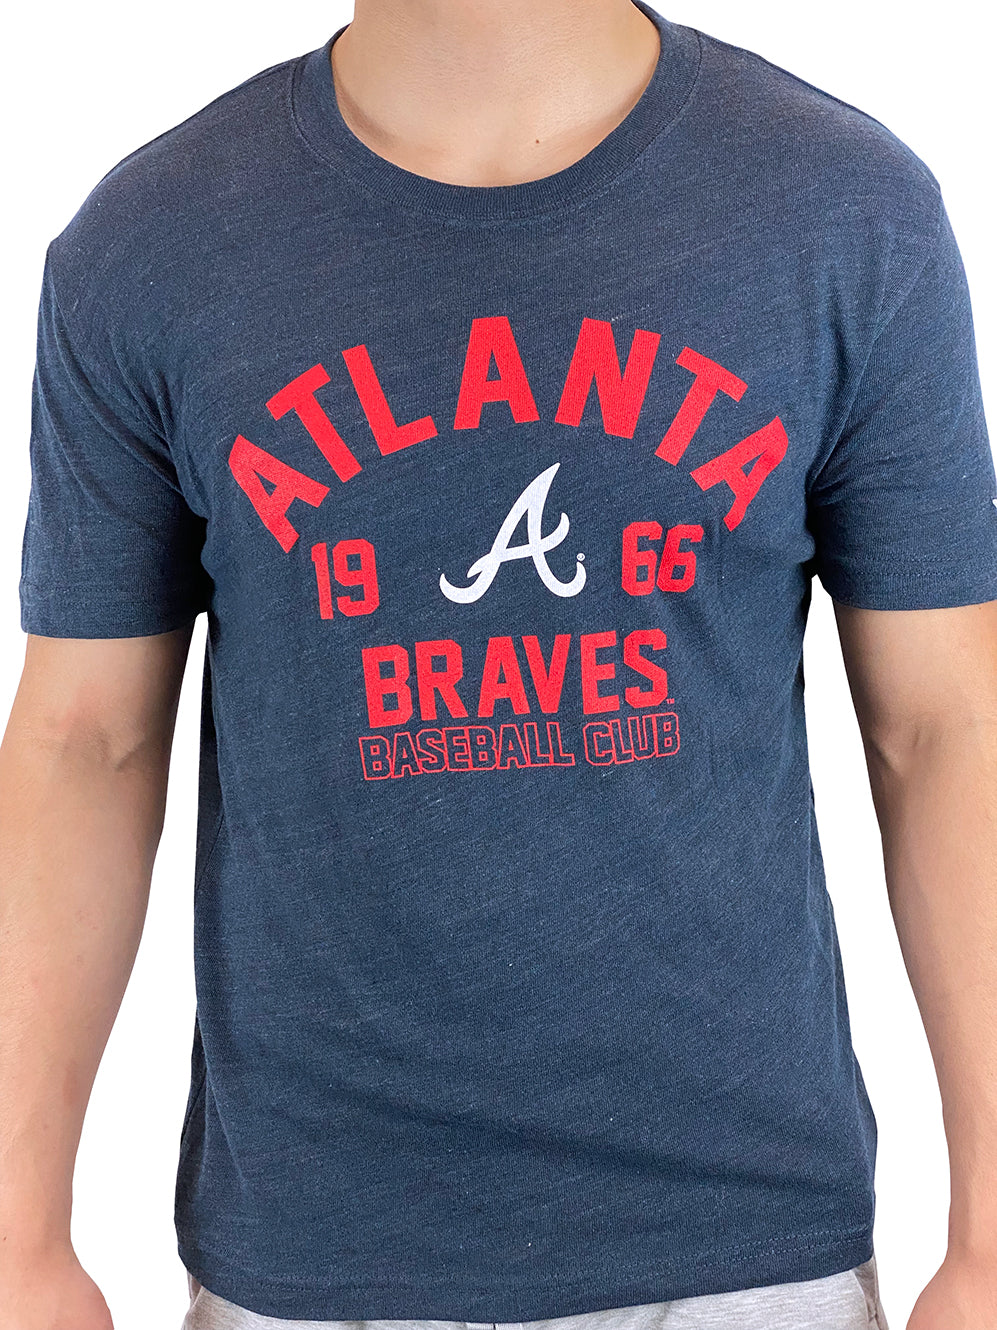 Official Men's Atlanta Braves Gear, Mens Braves Apparel, Guys Clothes